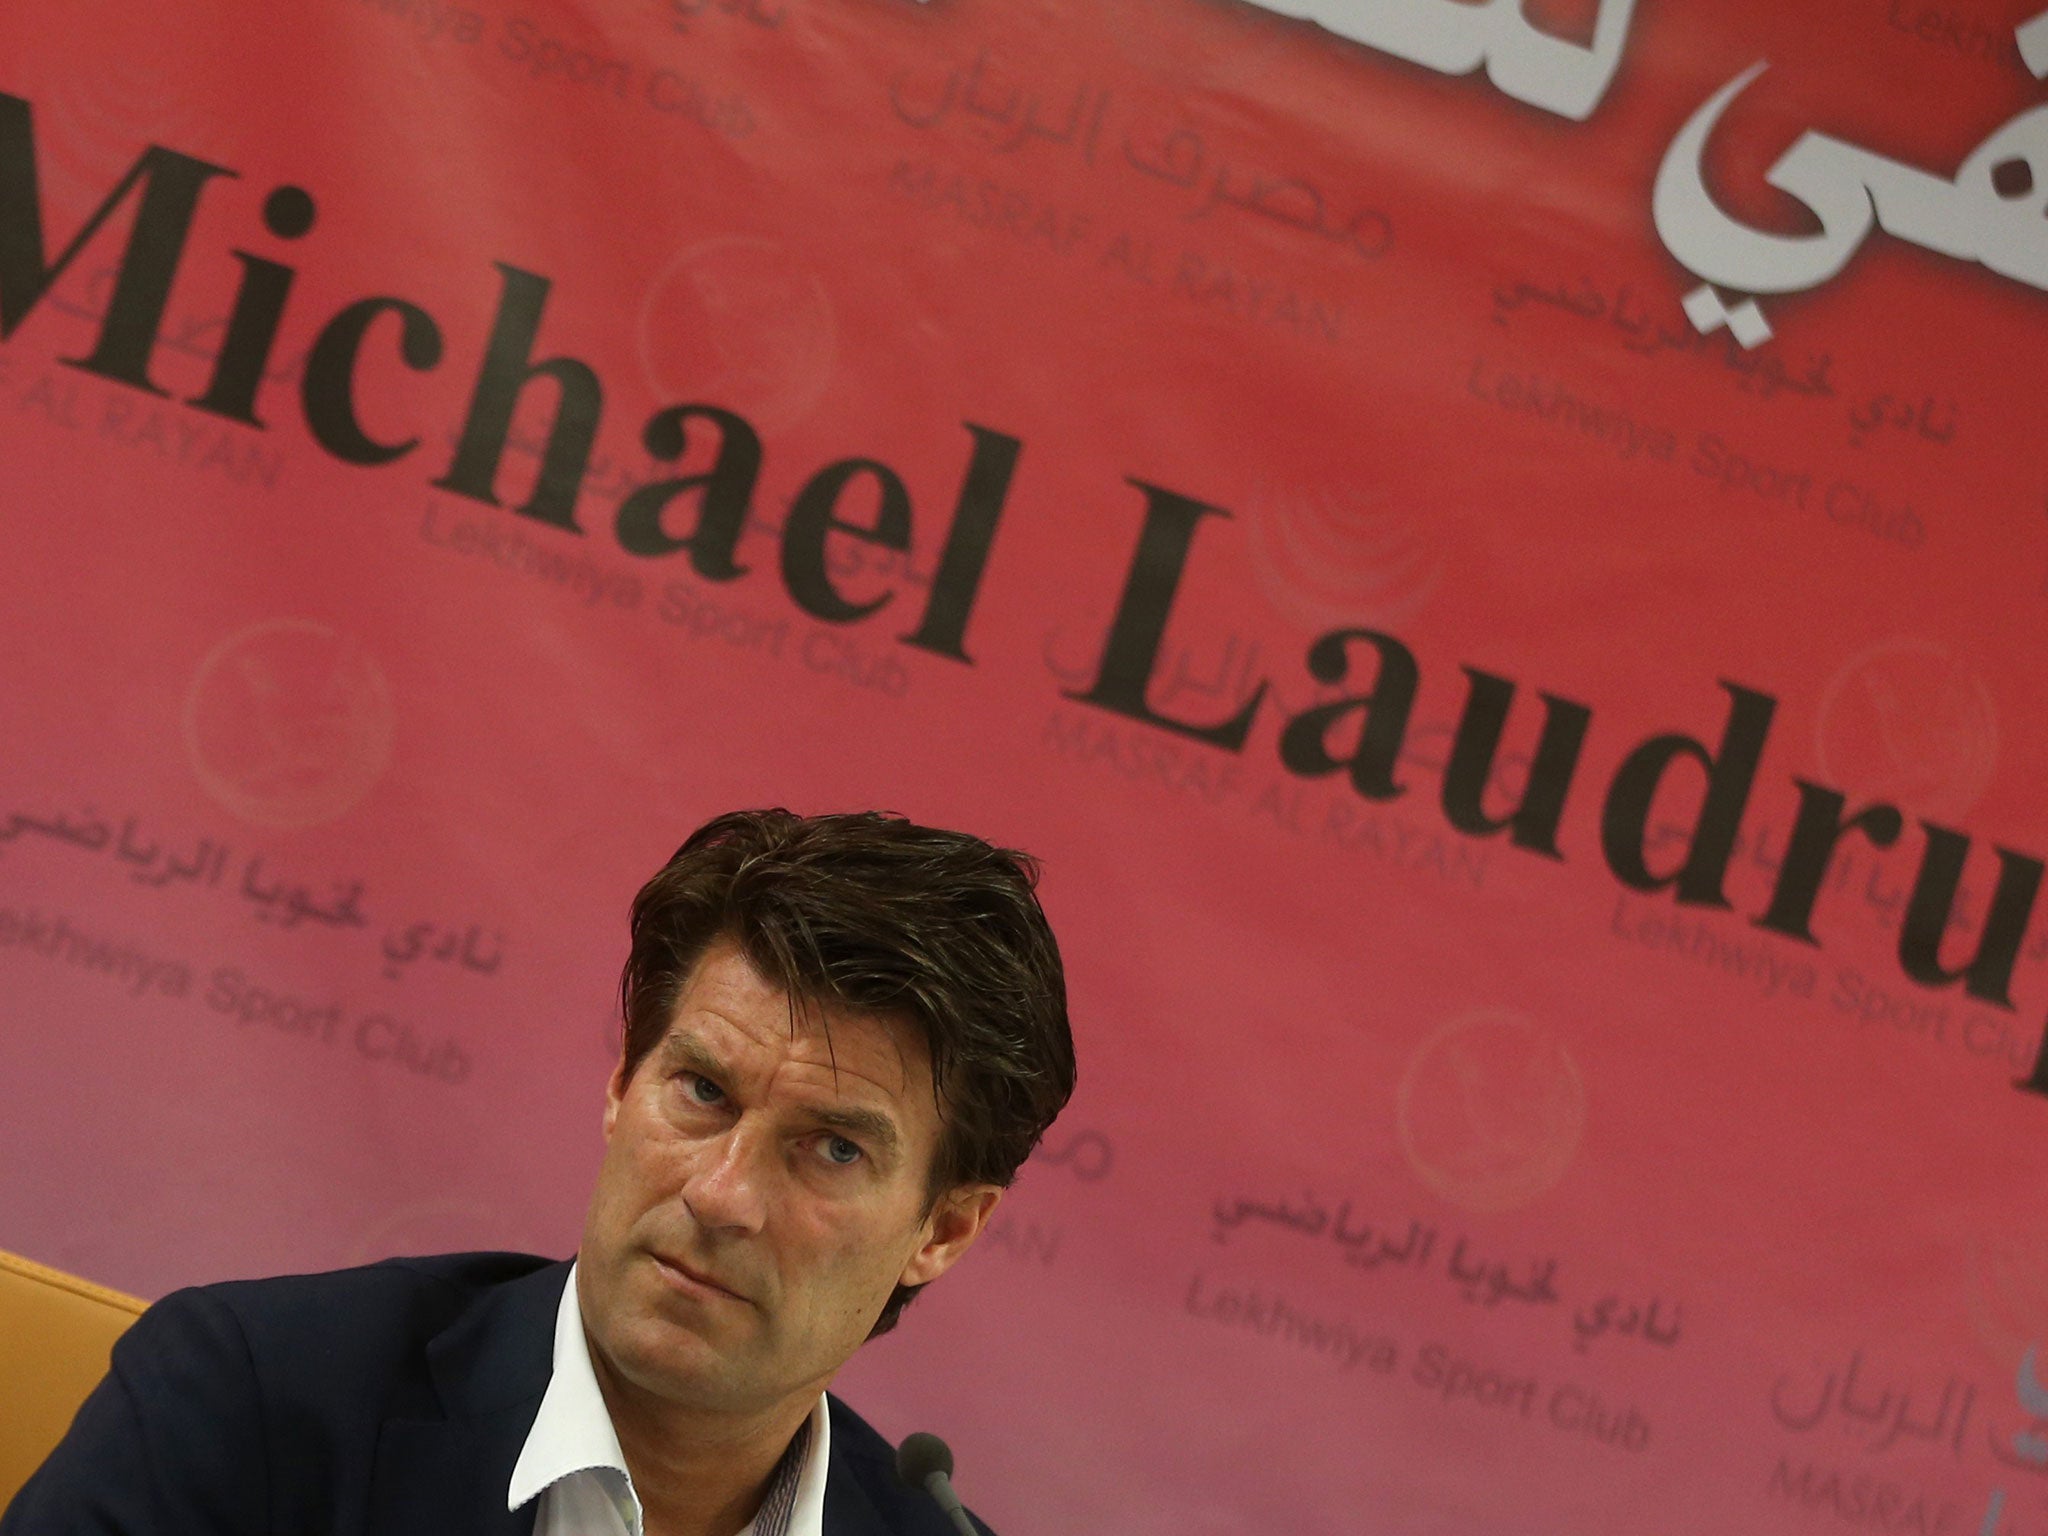 Michael Laudrup at his unveiling as Lekhwiya manager